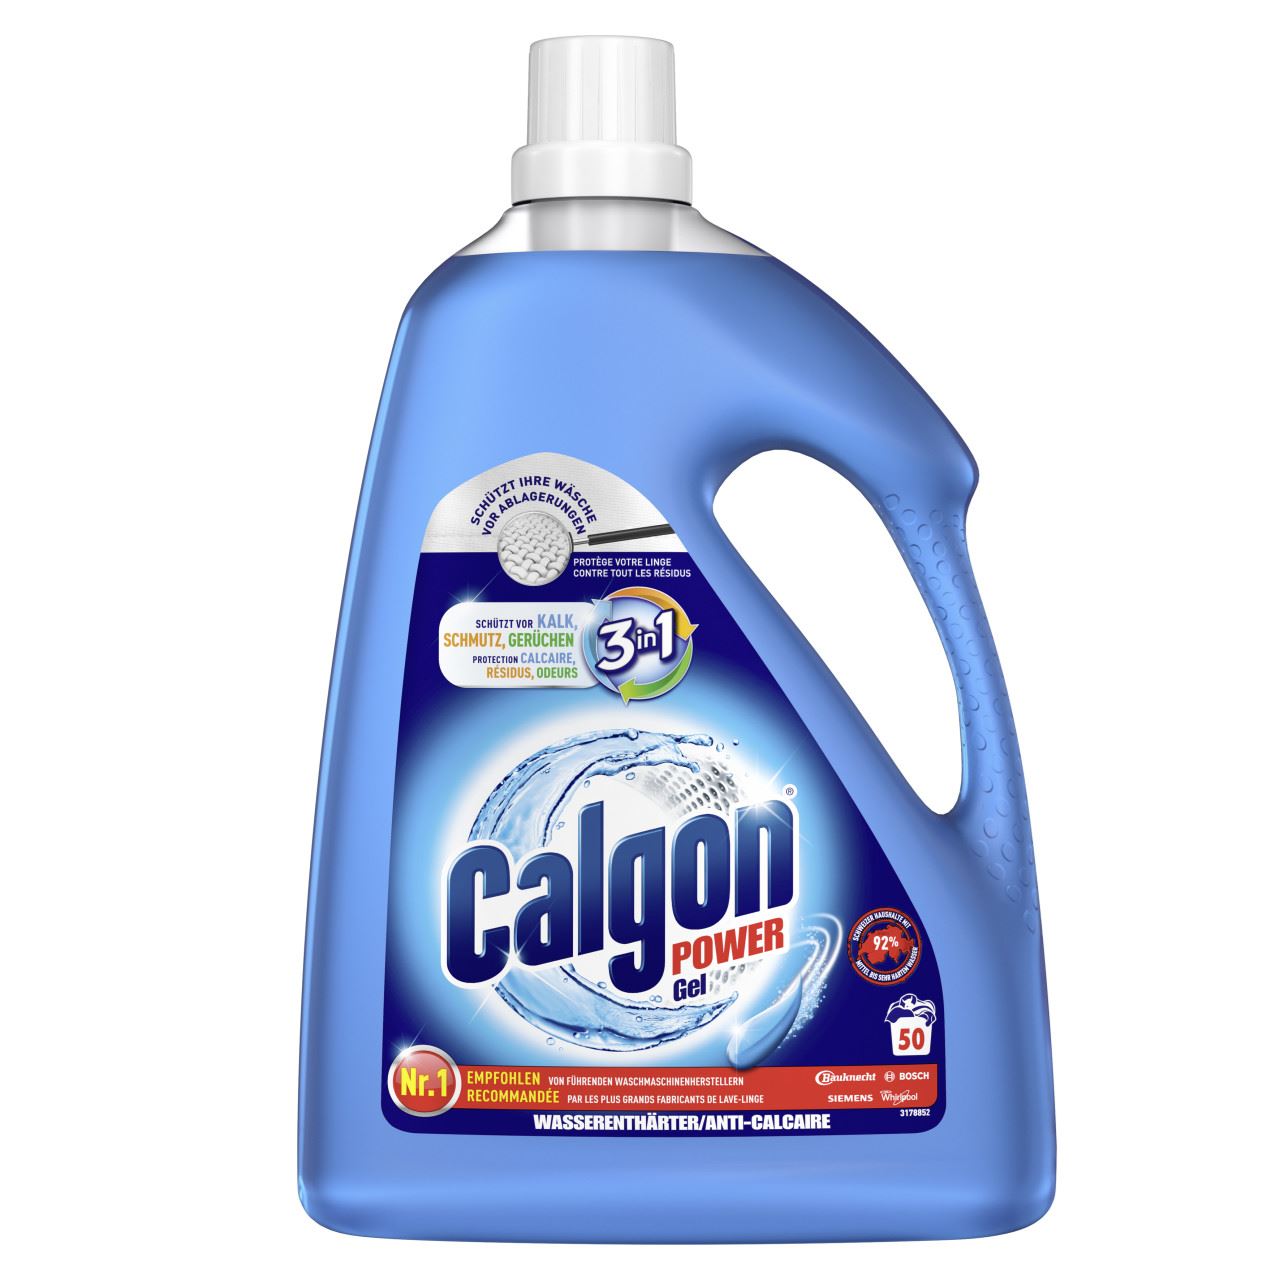 Calgon-Washing-Machine-Cleaner-2-5ltr-3in1-Gel-50sc